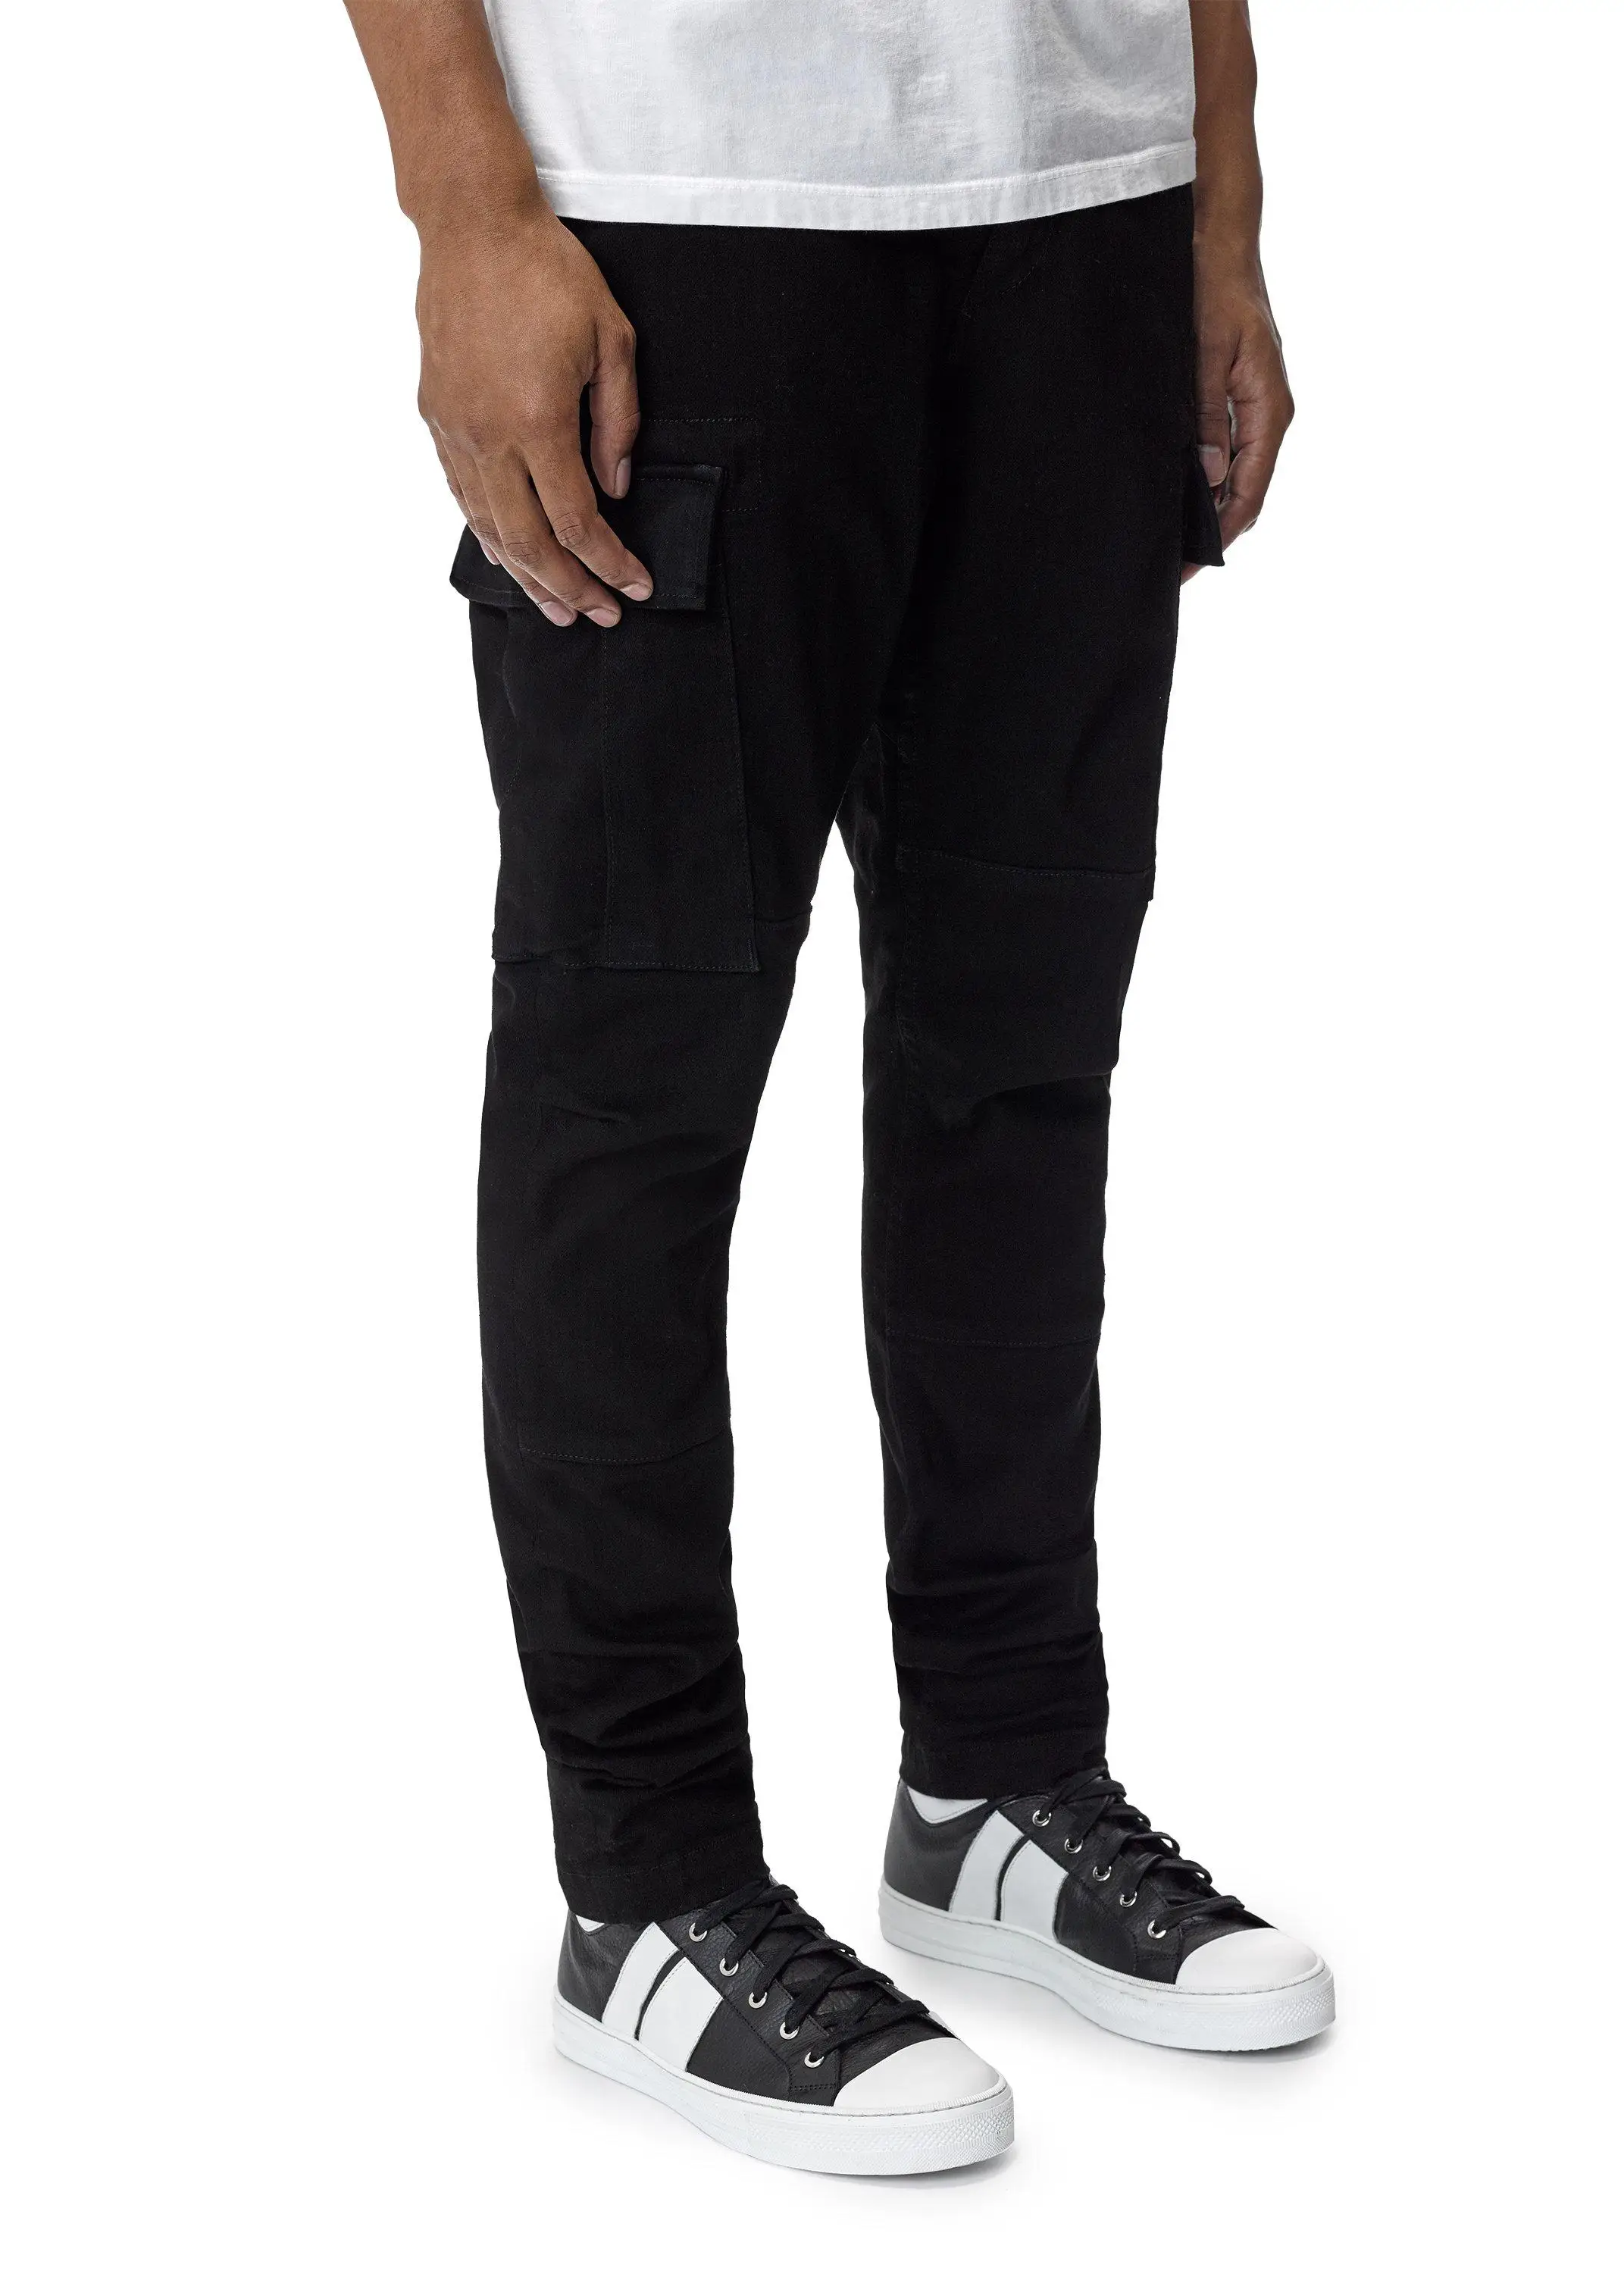 Diznew Custom Fashion Black Stretch Denim Pant Cargo Jeans Men - Buy ...